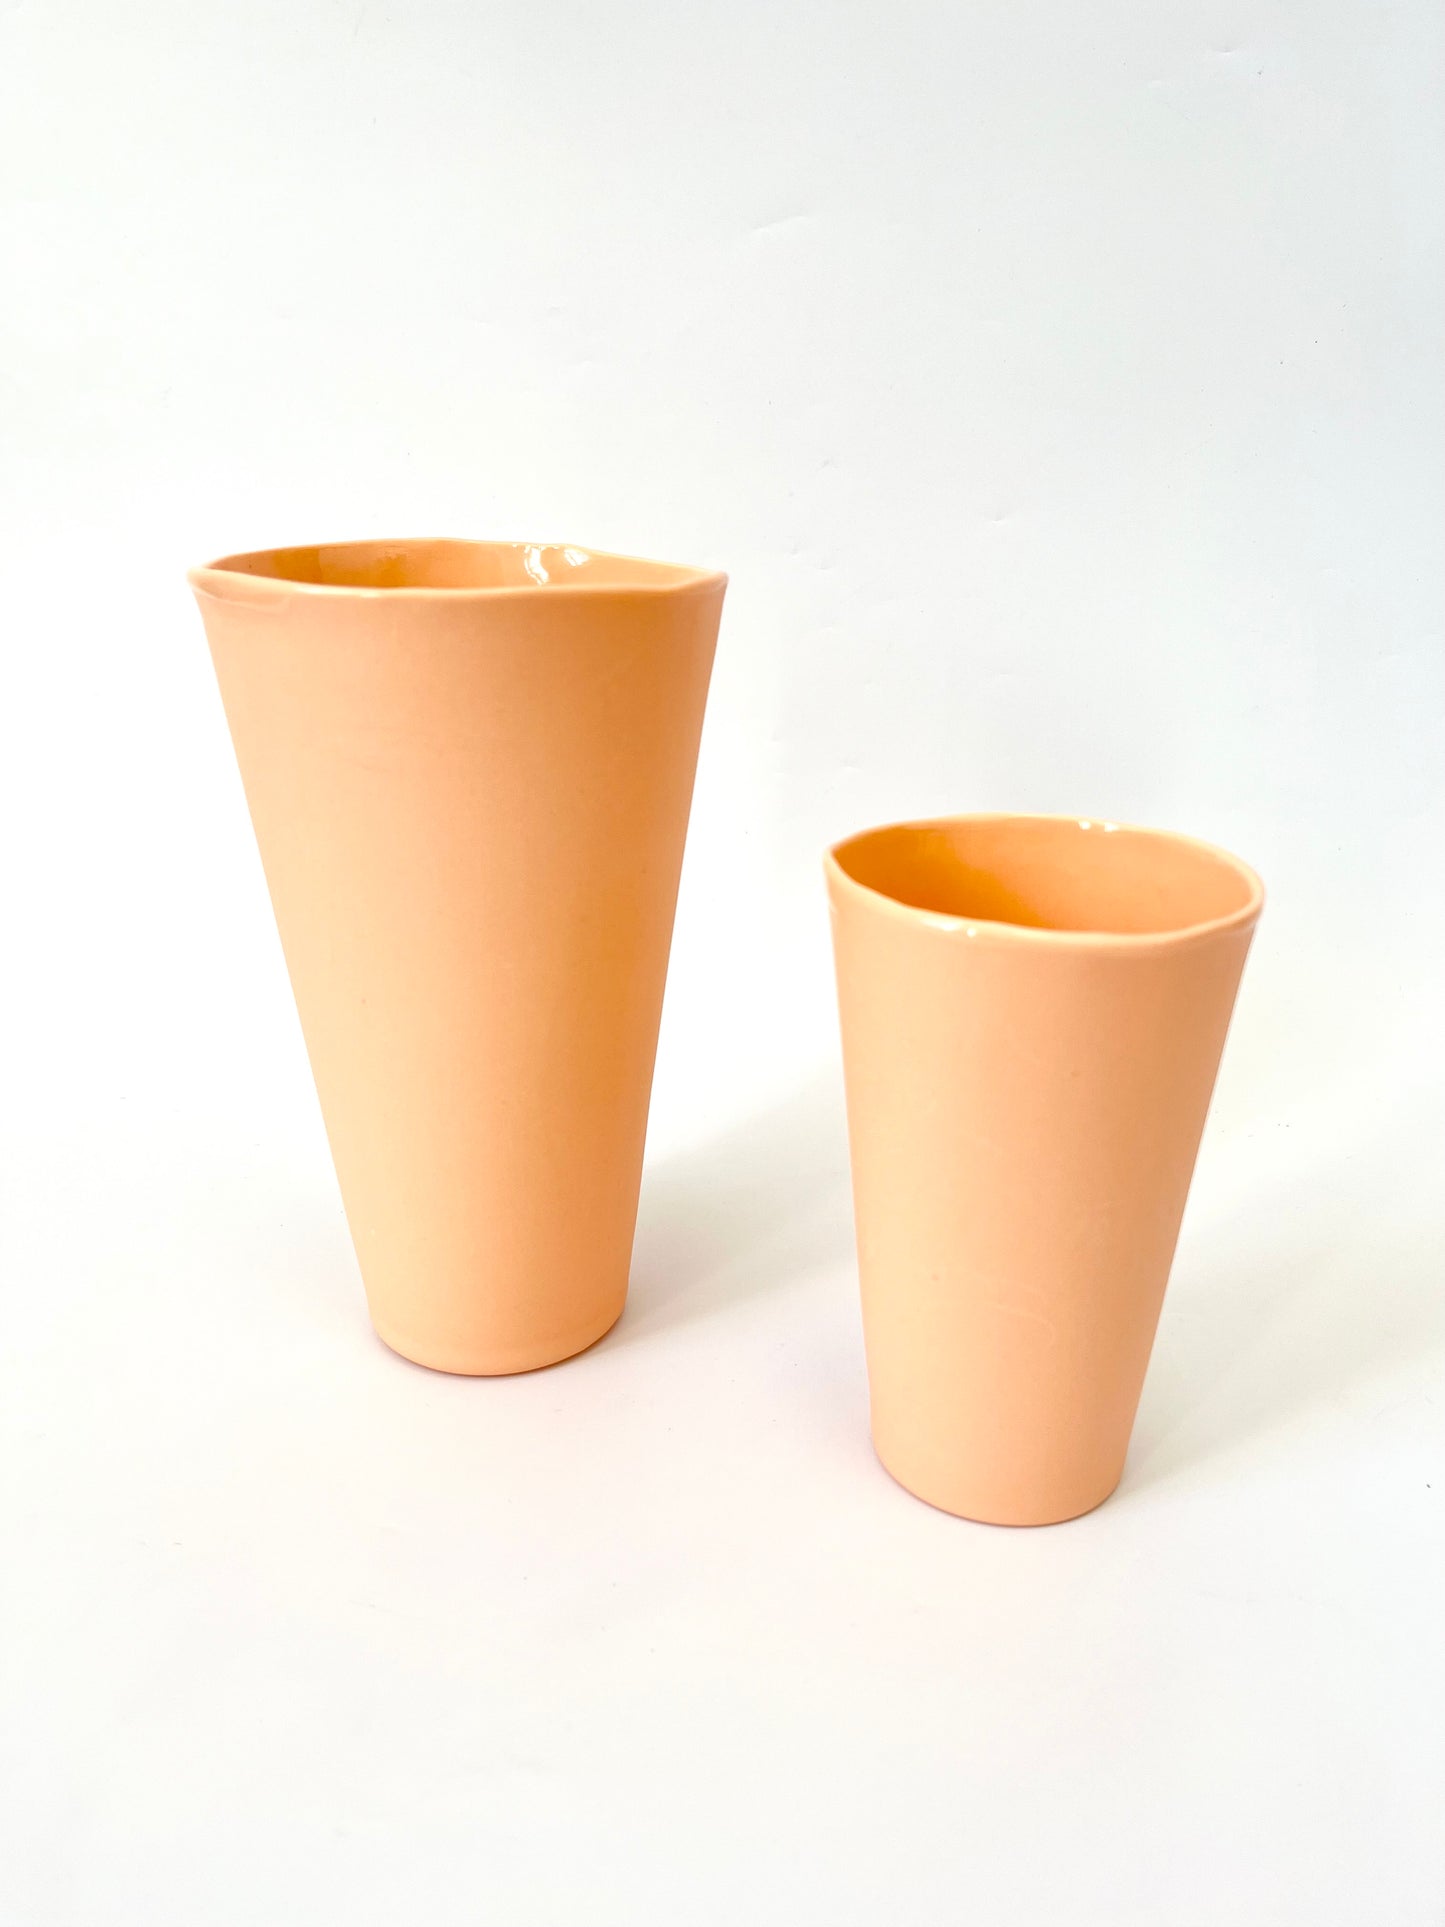 Cataloupe Vessel - One of a Kind Ceramic - Vase 10 x 18cm